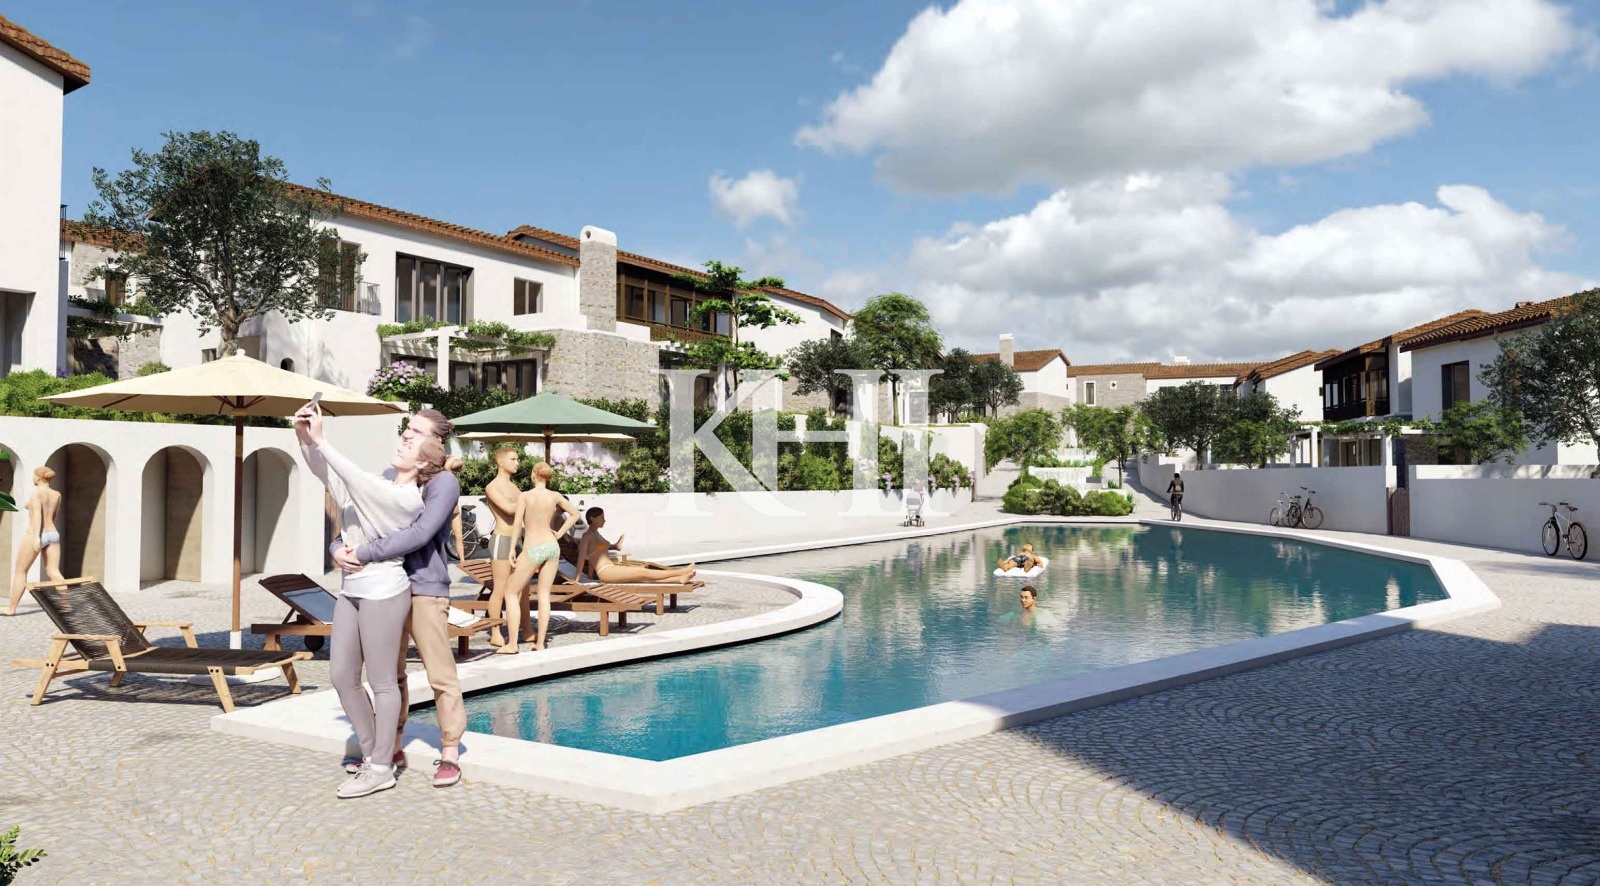 New Villa Project in Bodrum Slide Image 28